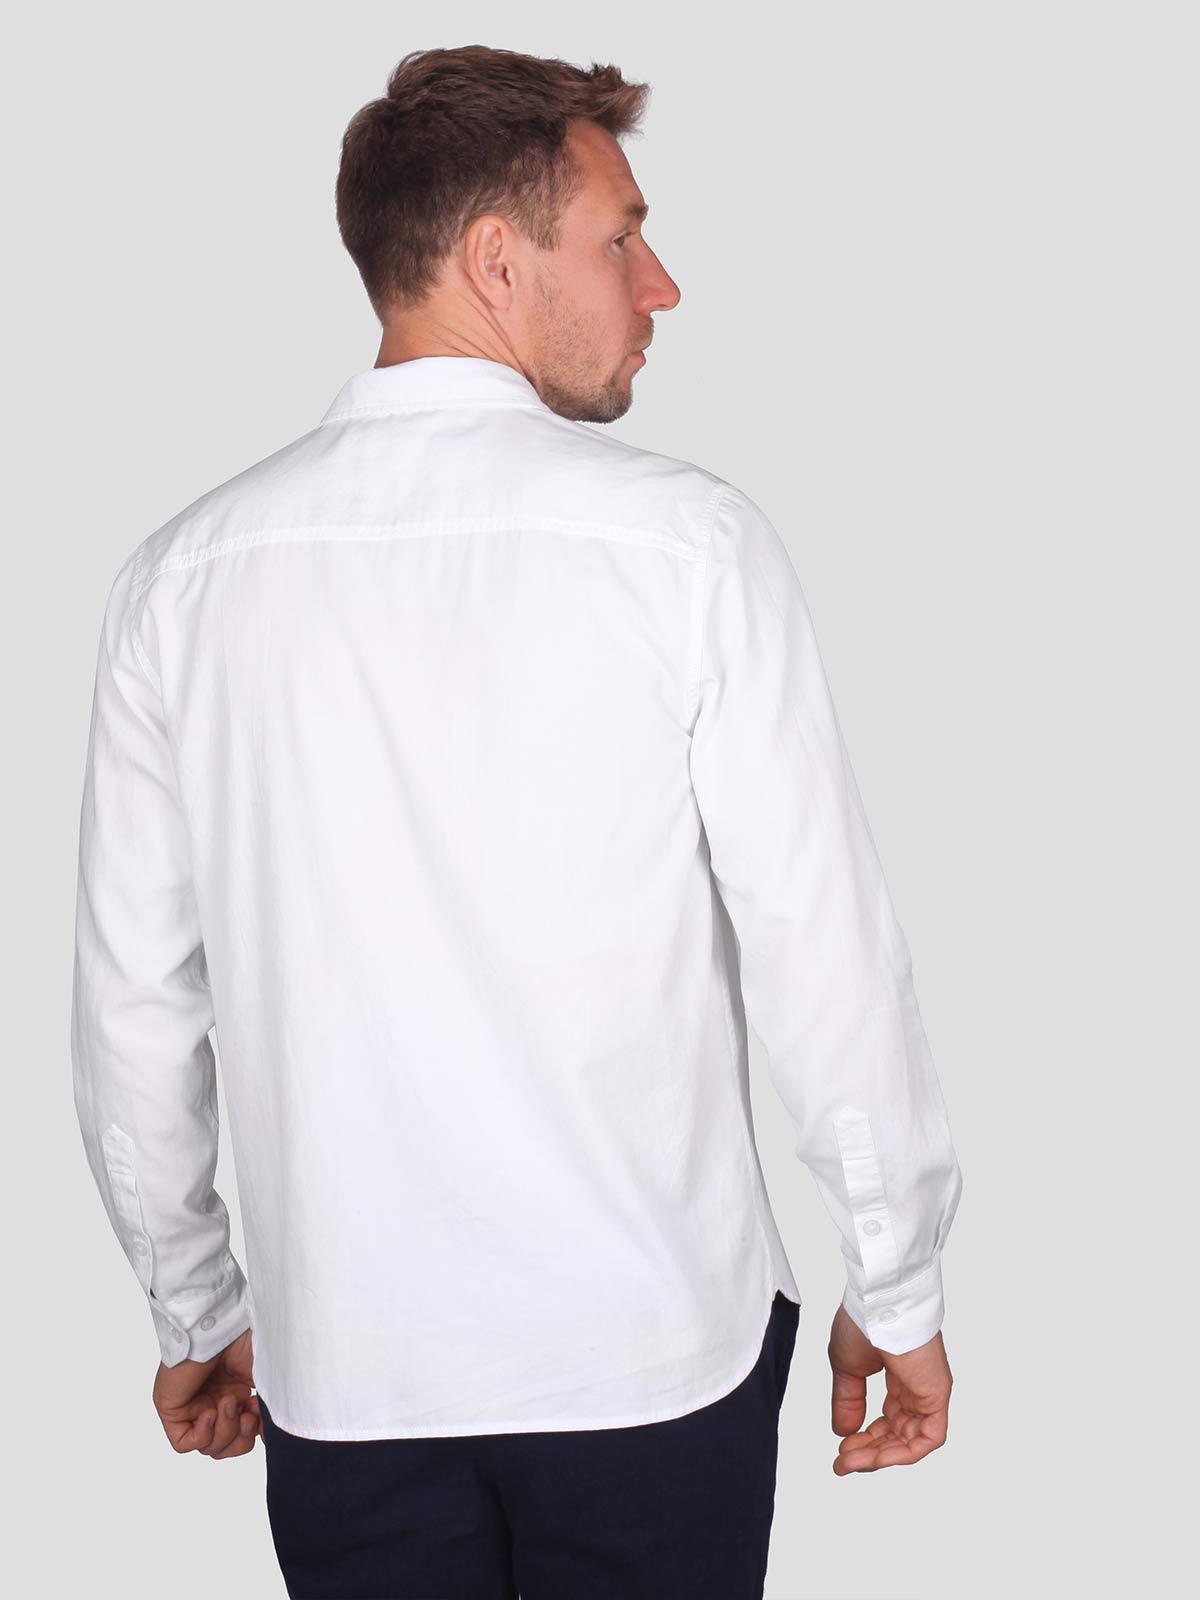 Arterton Shirt - White - Thought Clothing UK